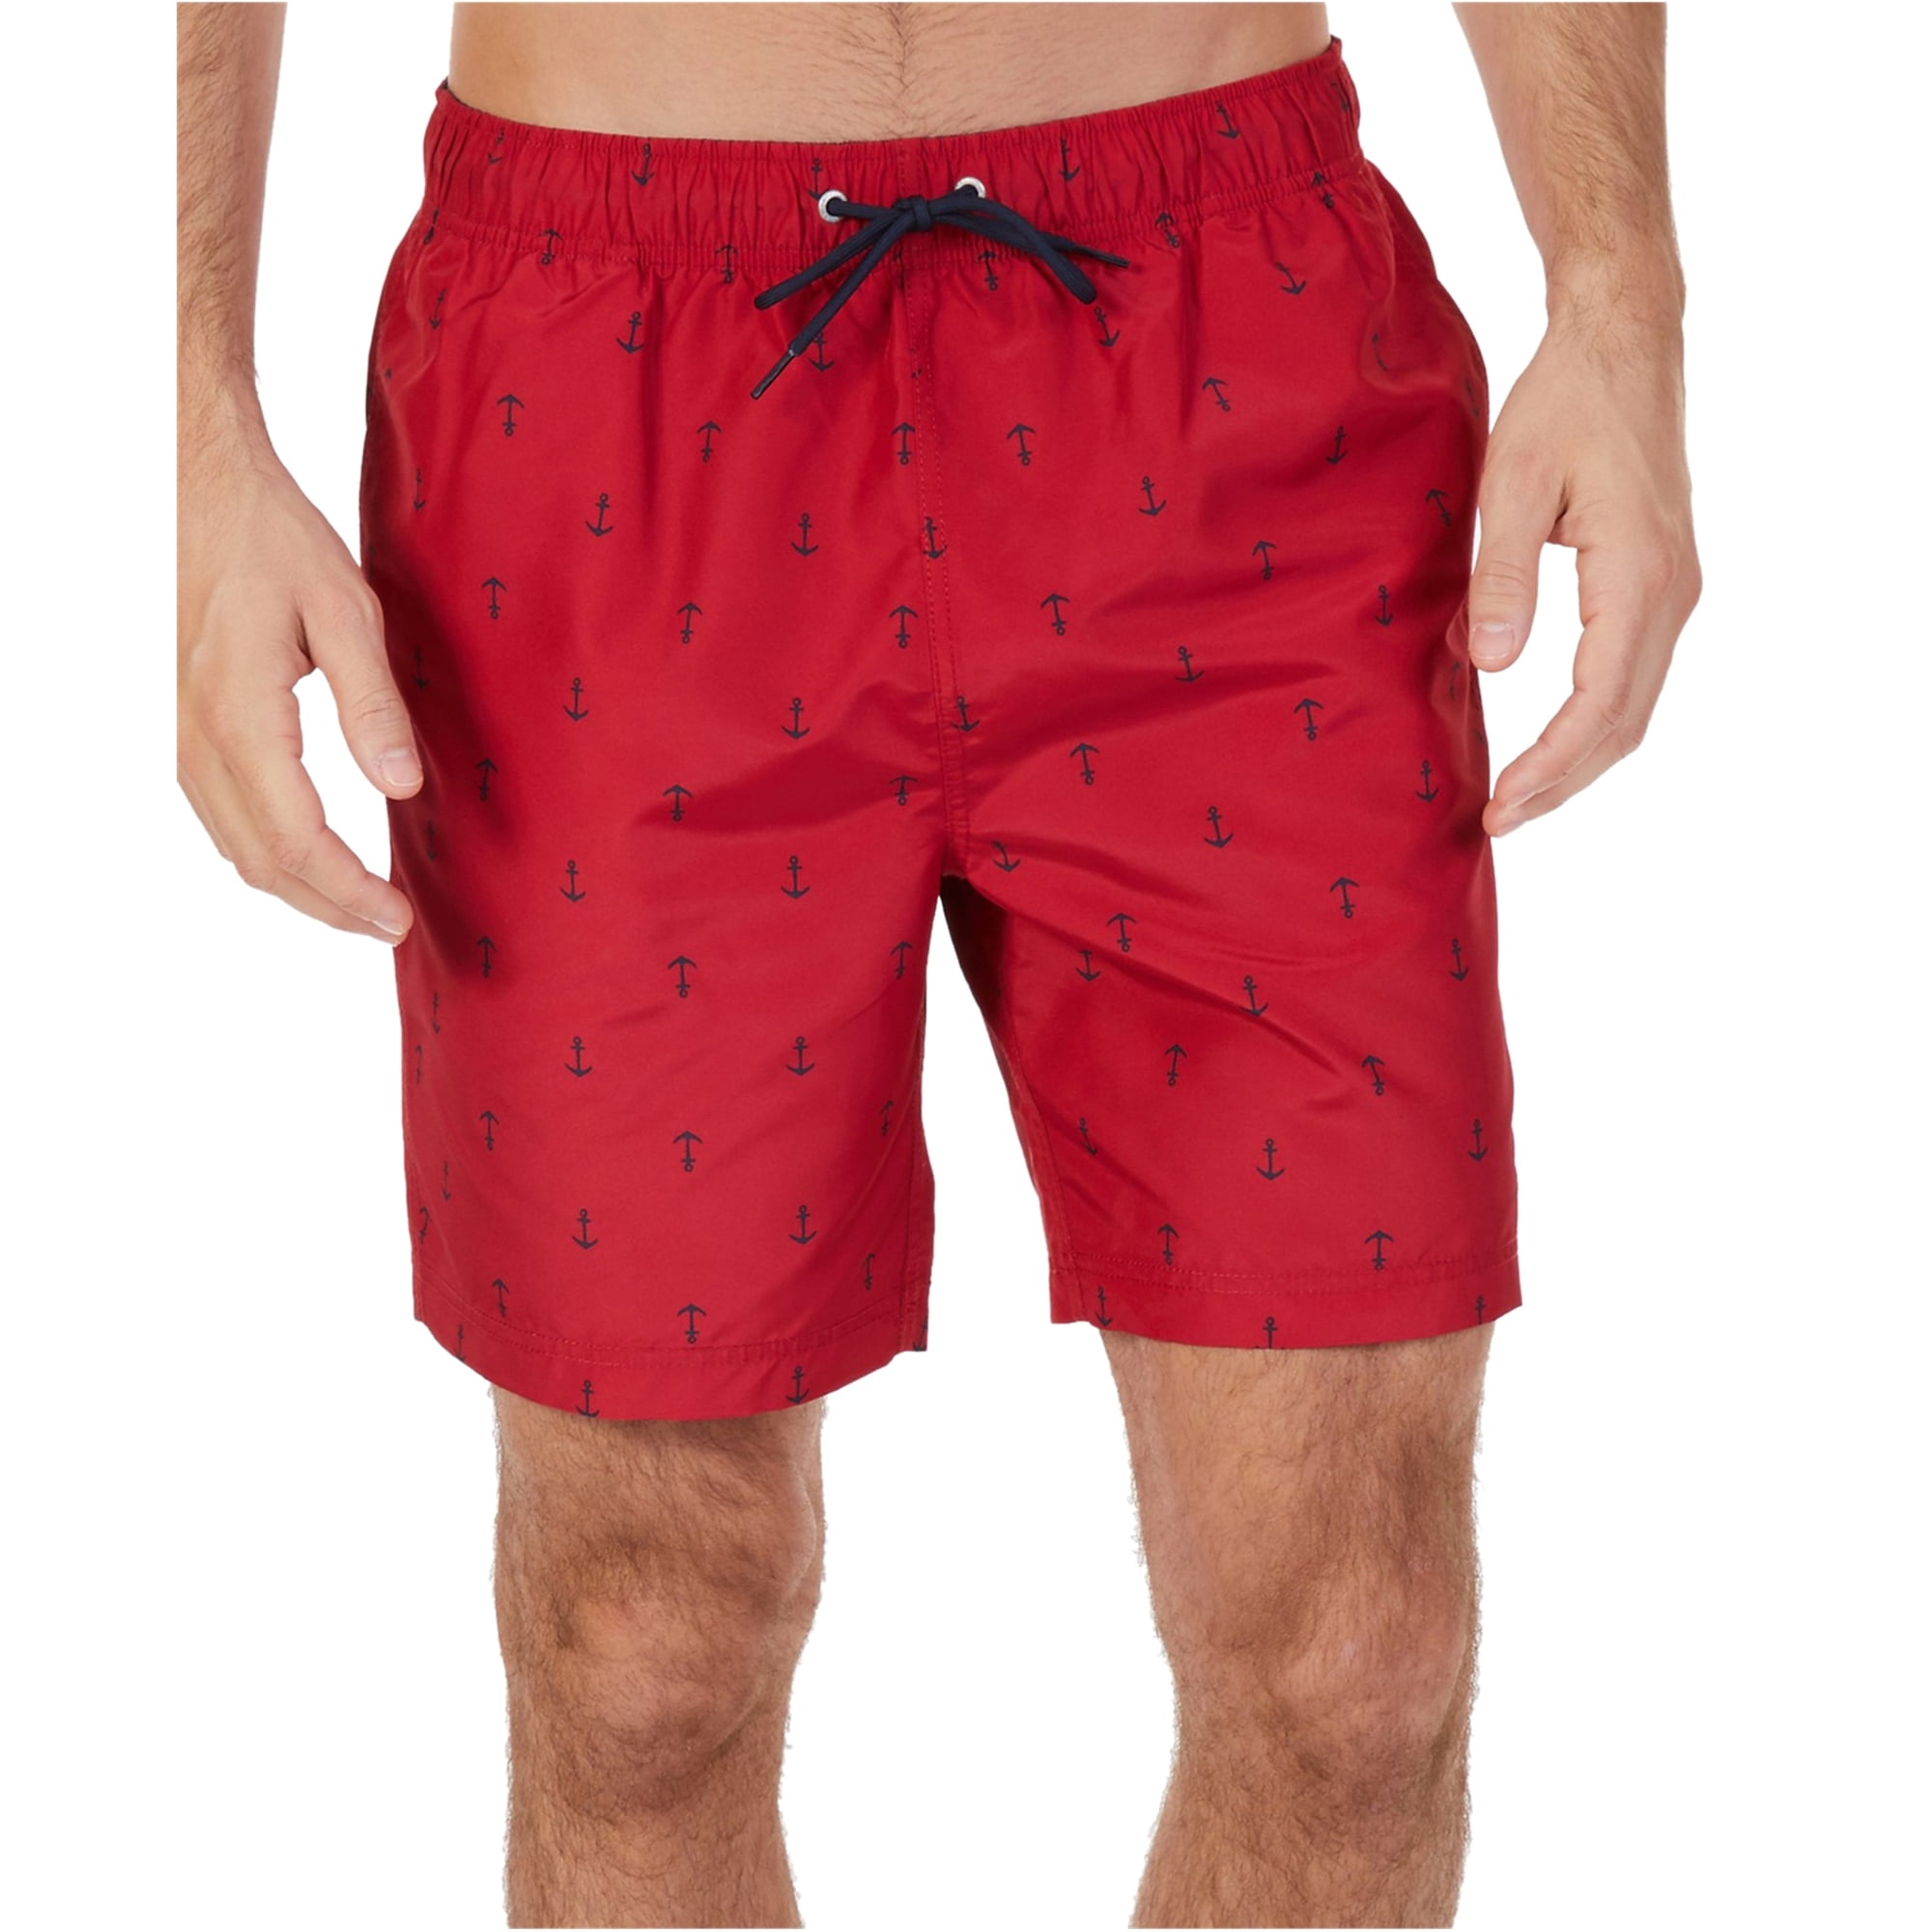 Nautica - Nautica Mens Anchor Print Swim Bottom Trunks, Red, Large ...